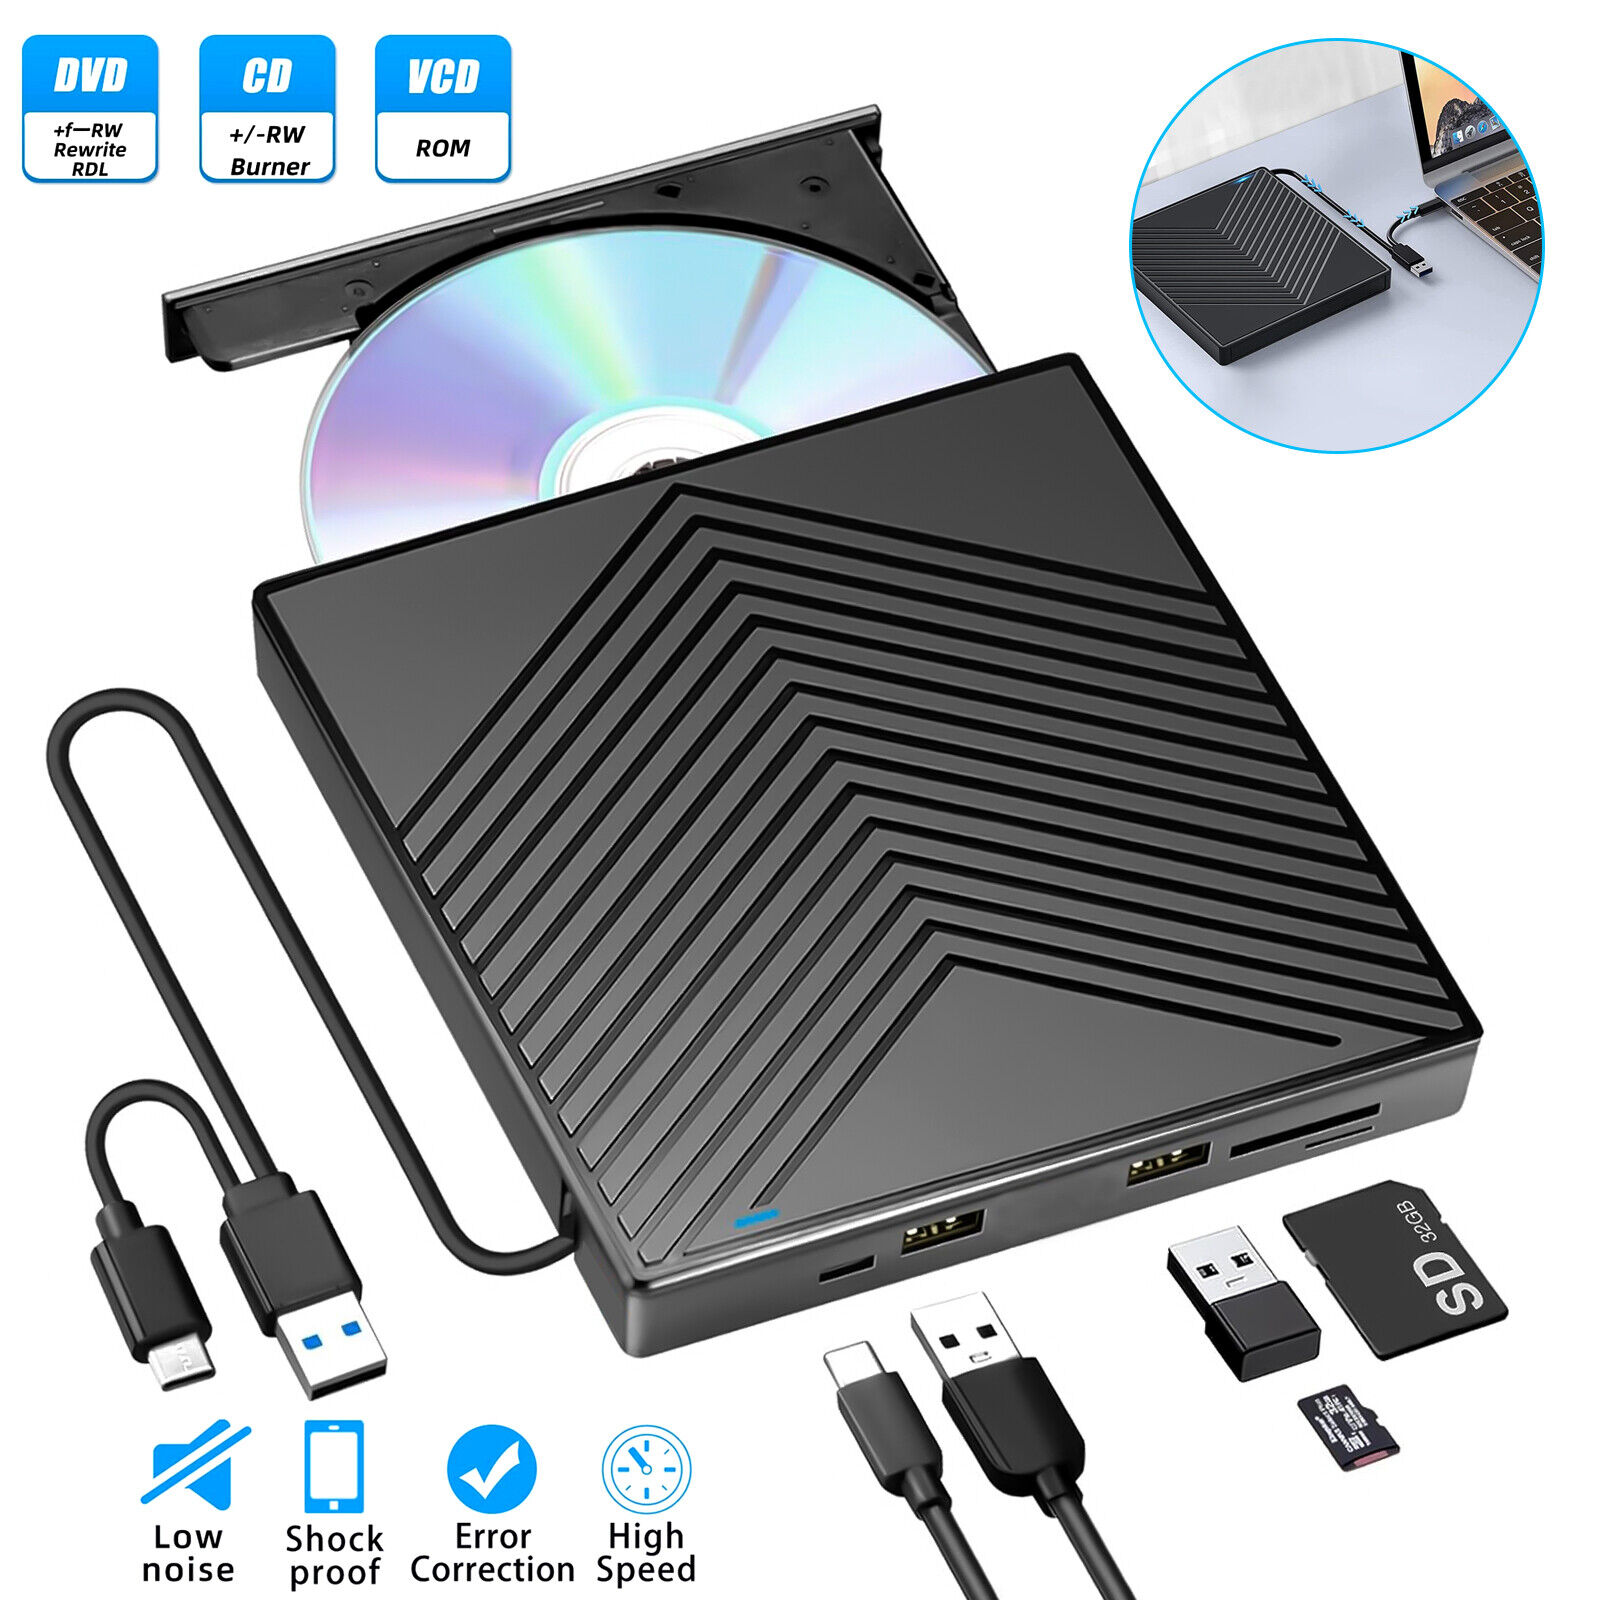 USB 3.0 External CD DVD Drive Disc Player Burner Writer Slim for Laptop PC Mac